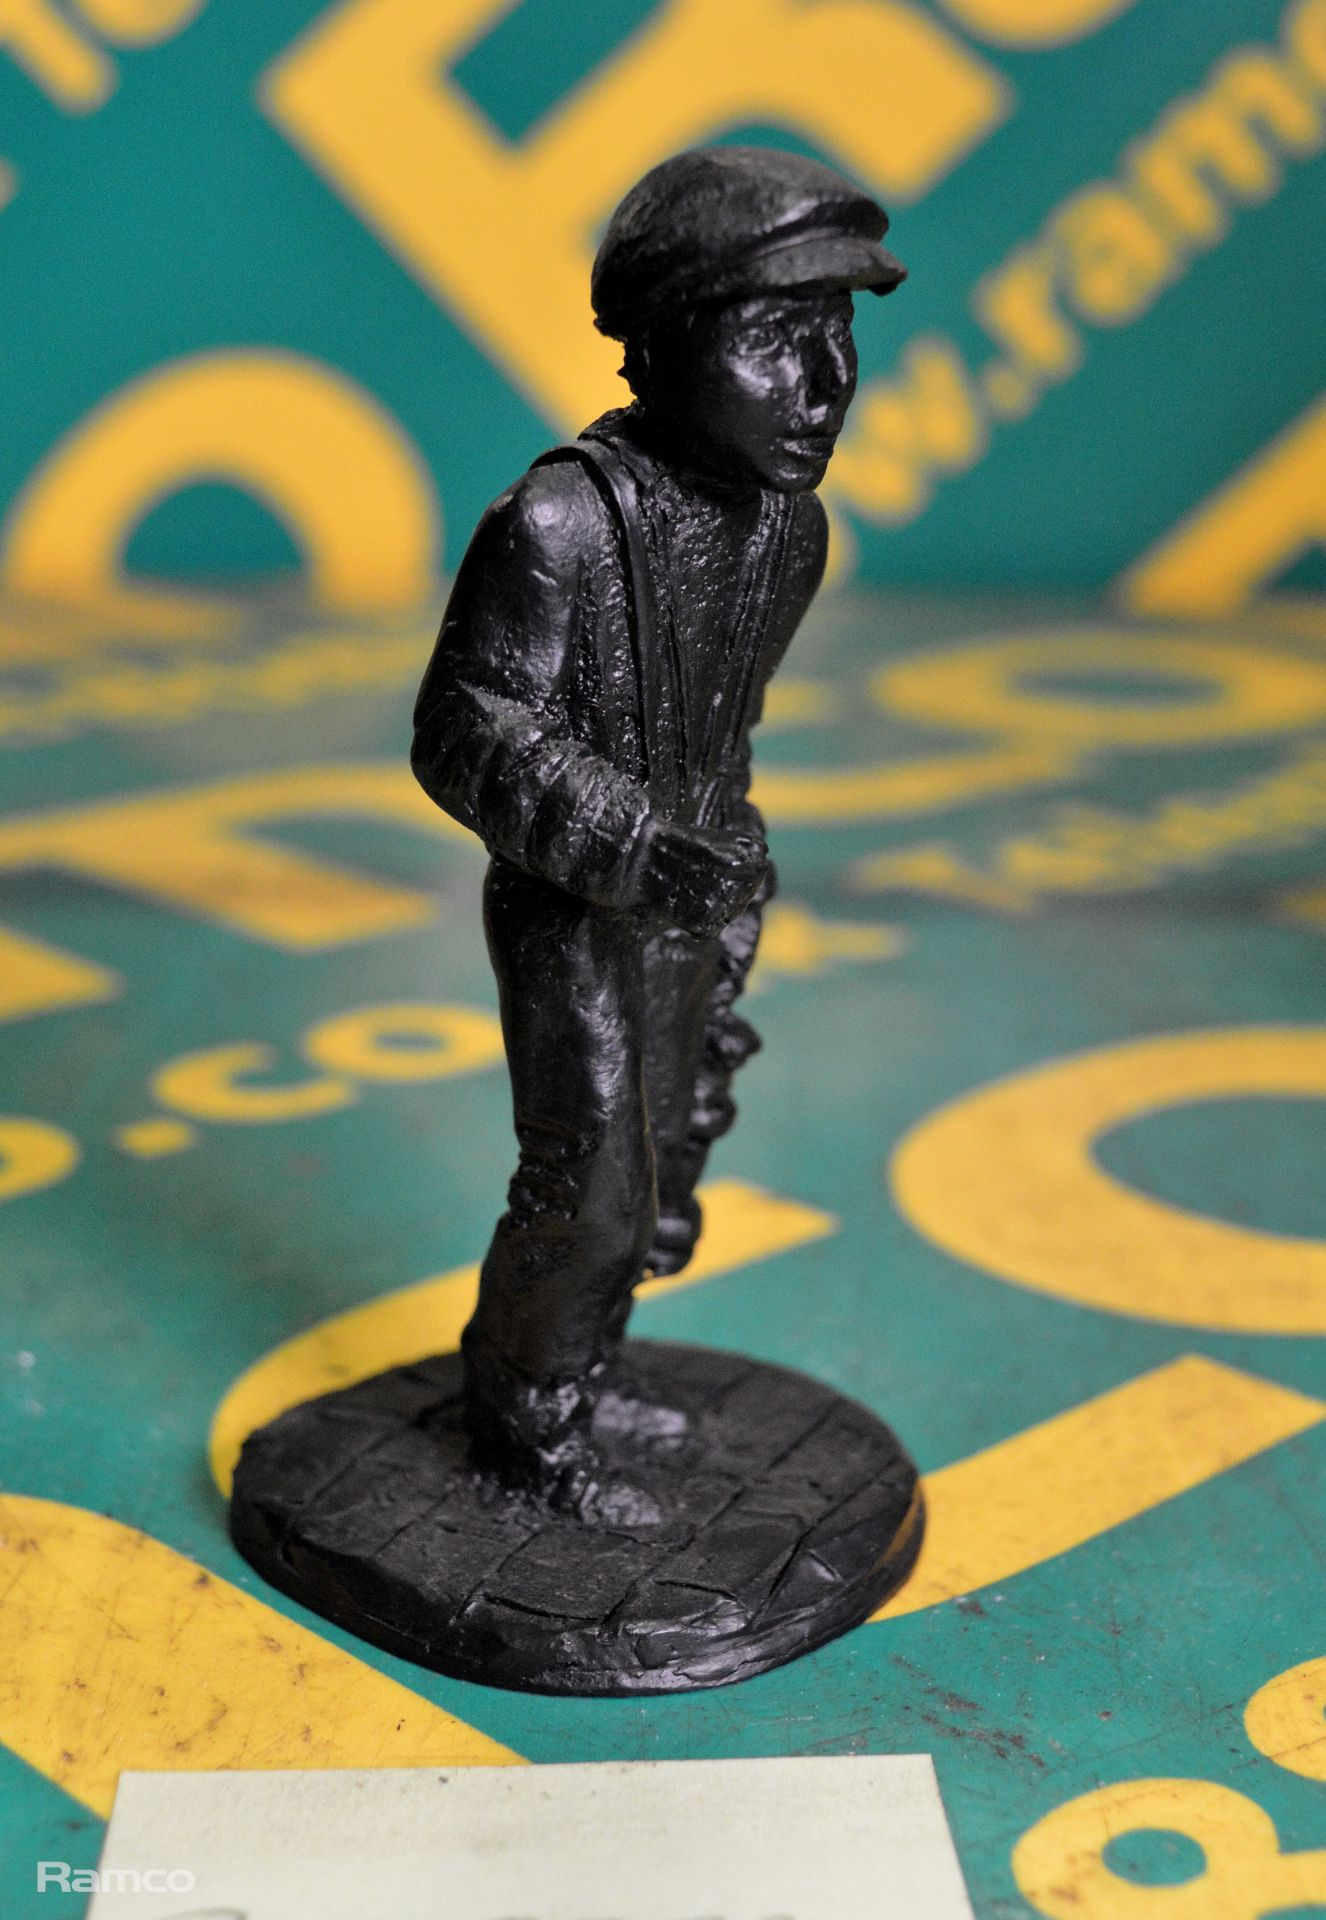 Classique coal miner figure ornament - Image 2 of 2